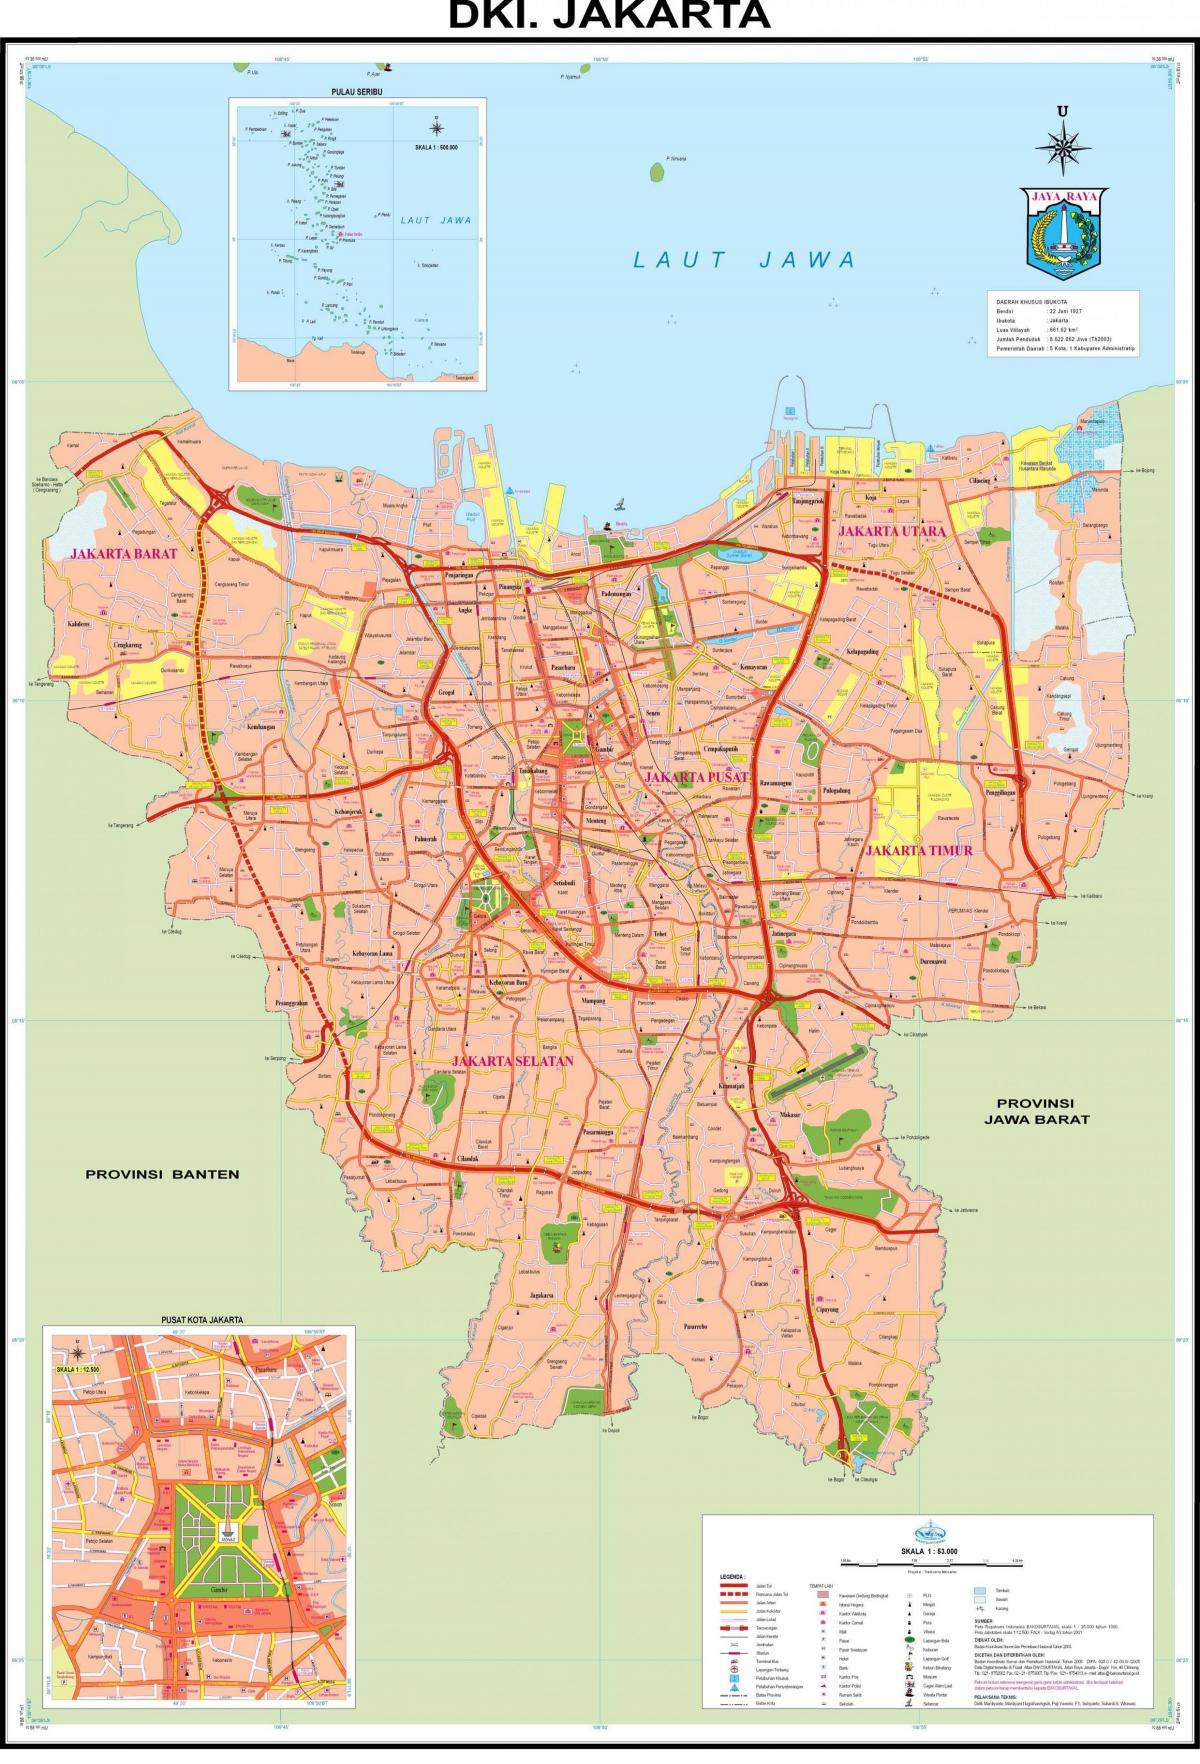 Jakarta city karta